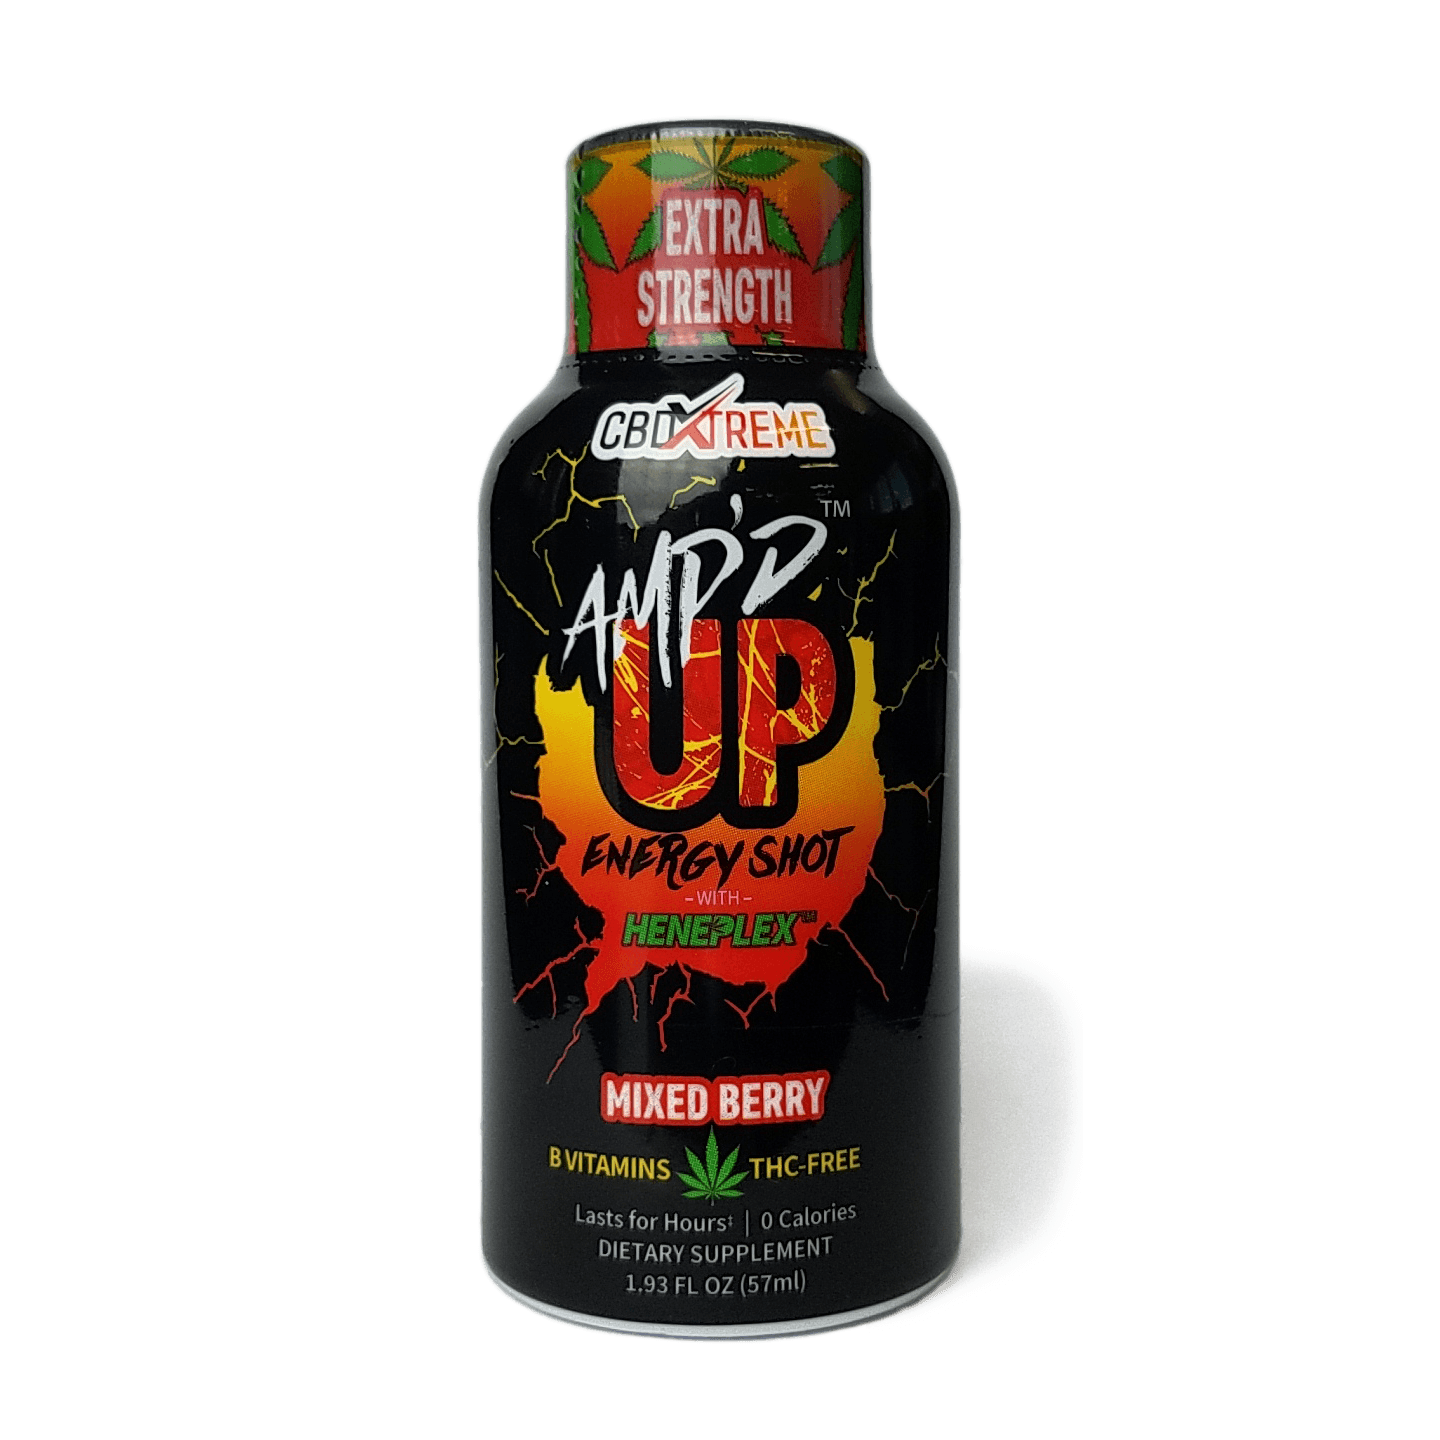 AMPD UP | CBD Infused Energy Shot - 240mg Caffeine